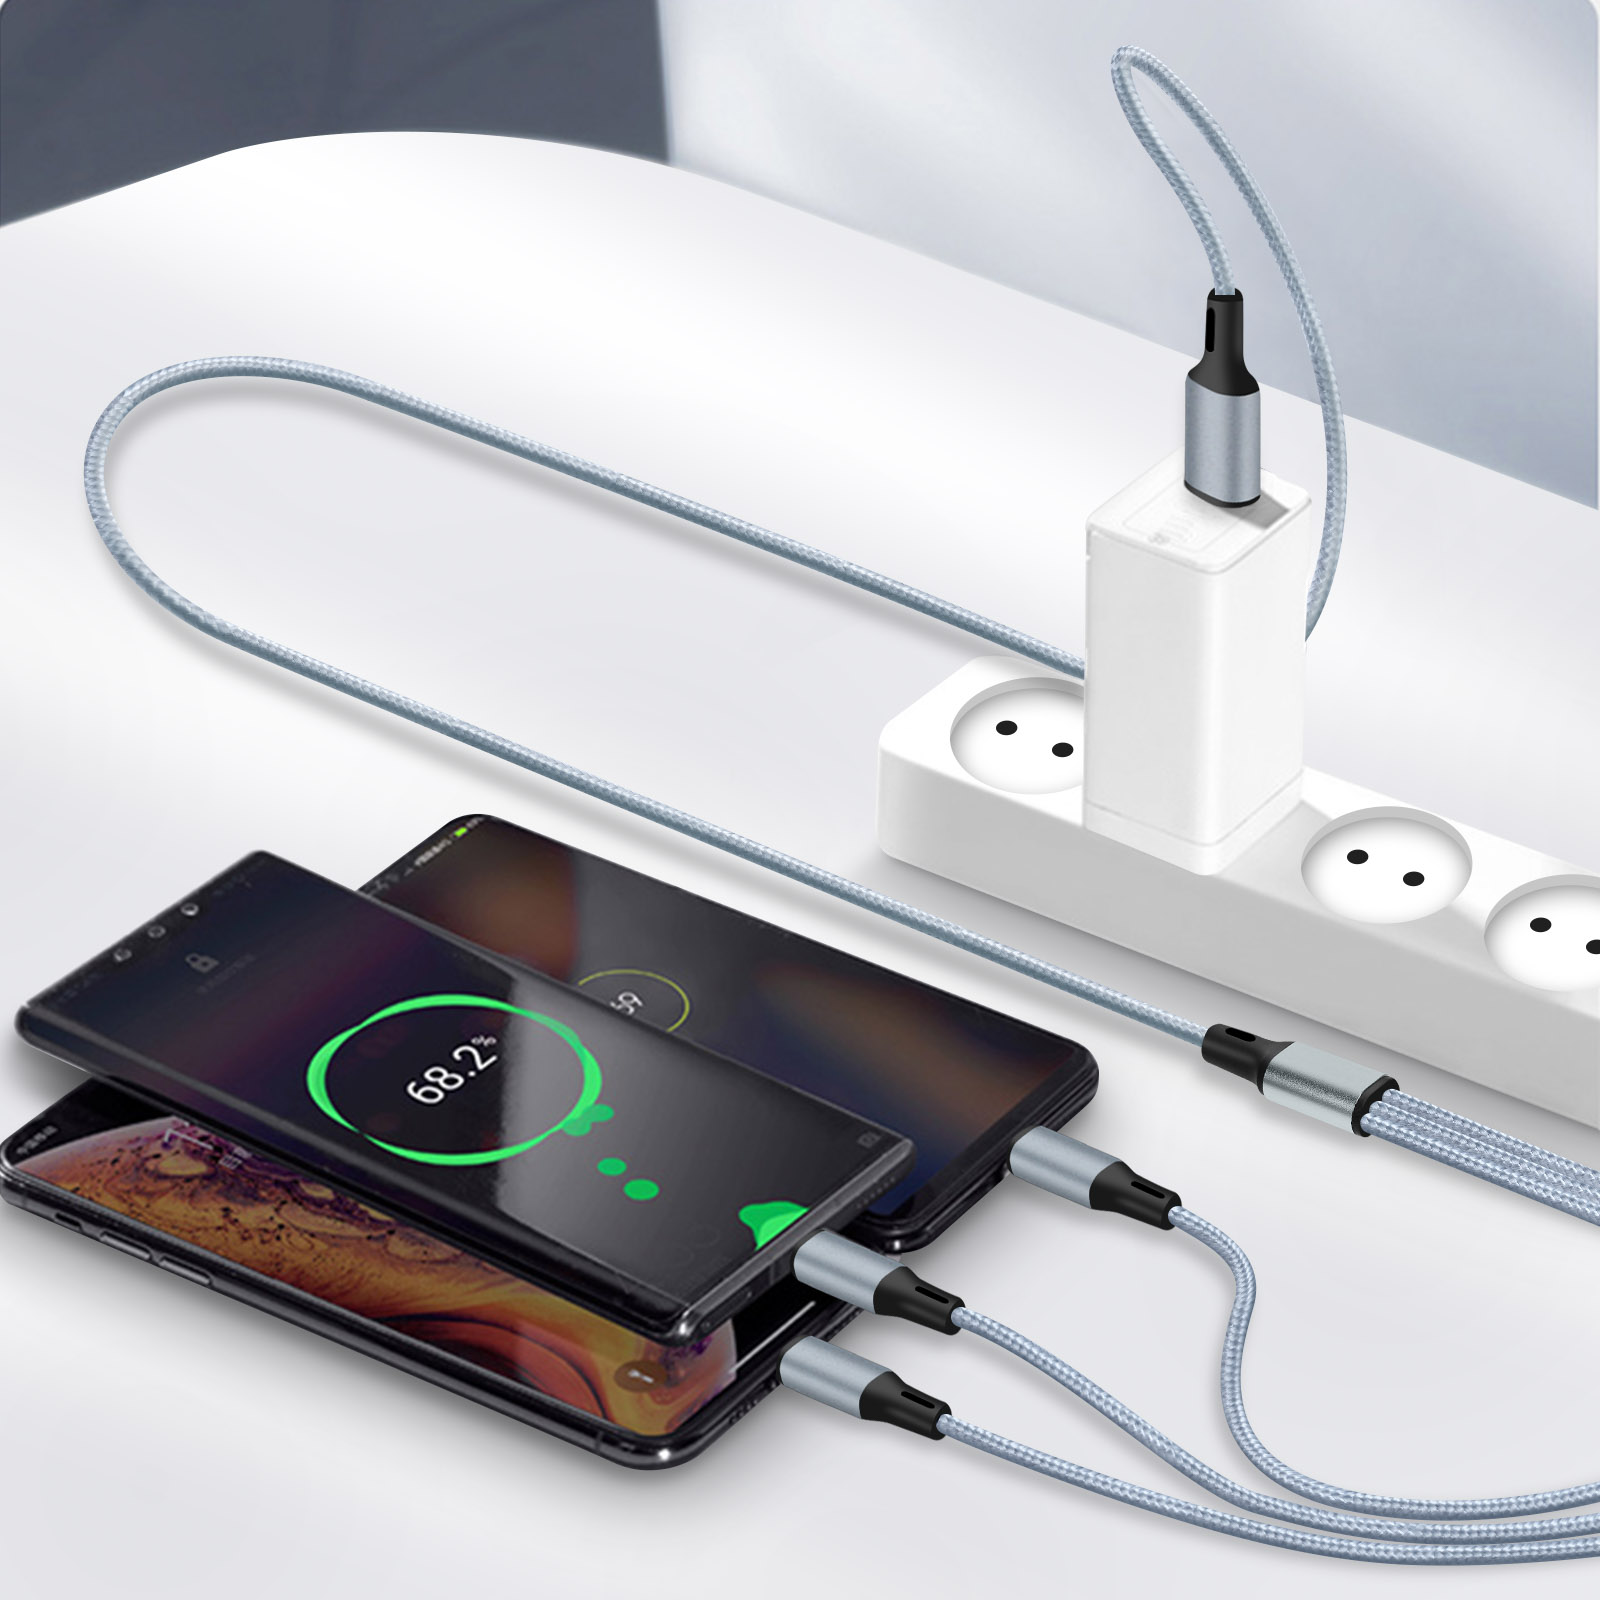 lang AVIZAR USB-C, 1,2m USB-Kabel mit Kabel und 3-in-1 Micro-USB Anschlüssen, Lightning